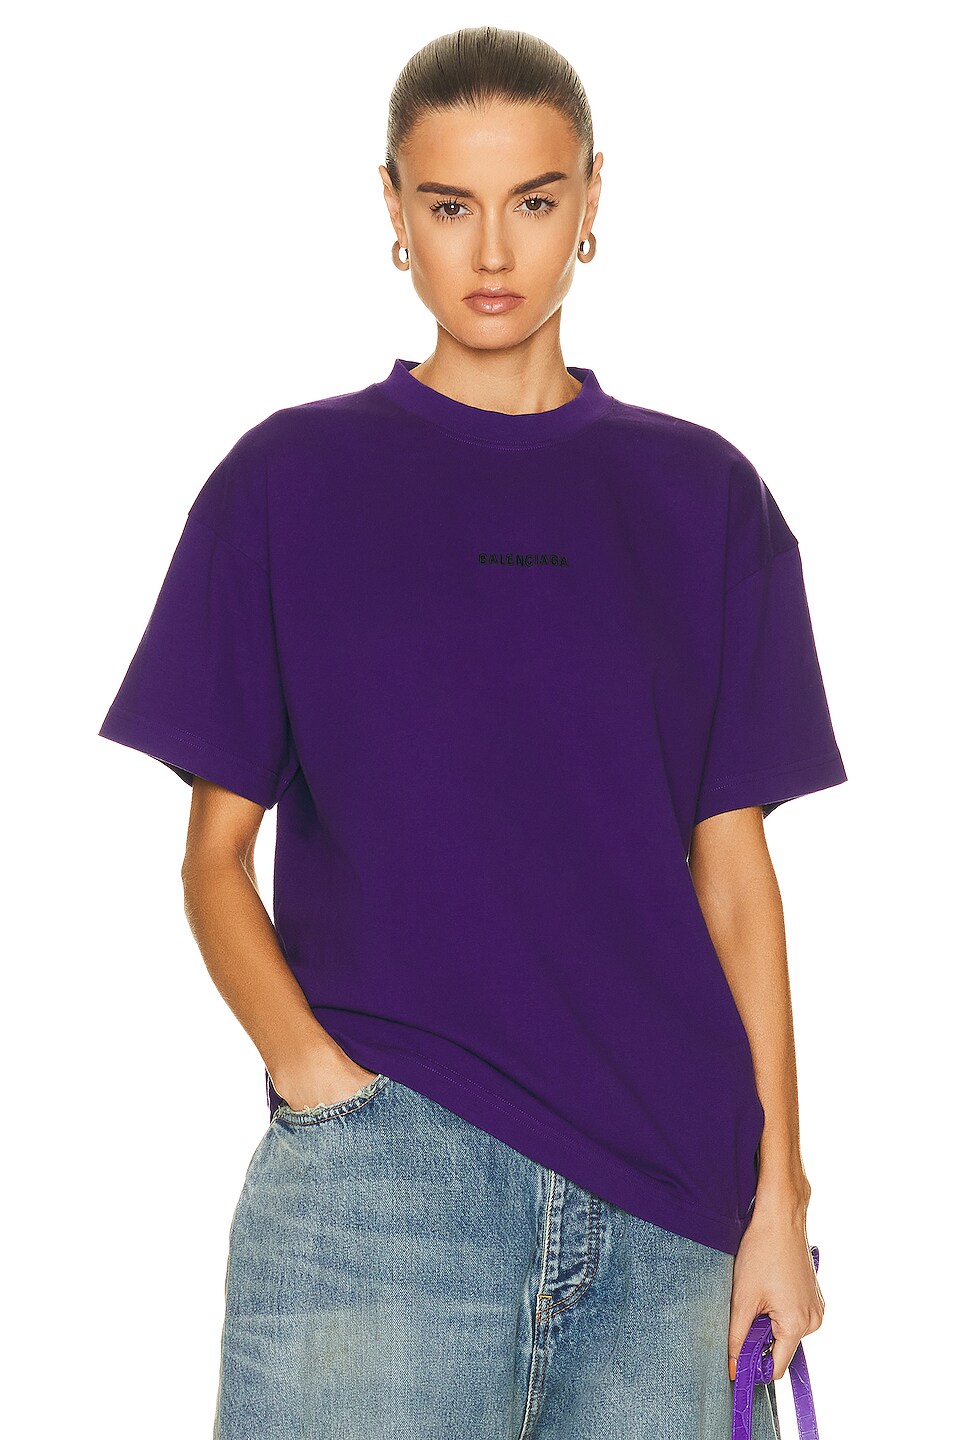 Balenciaga Medium Fit T-Shirt in Deep Purple & Black | FWRD